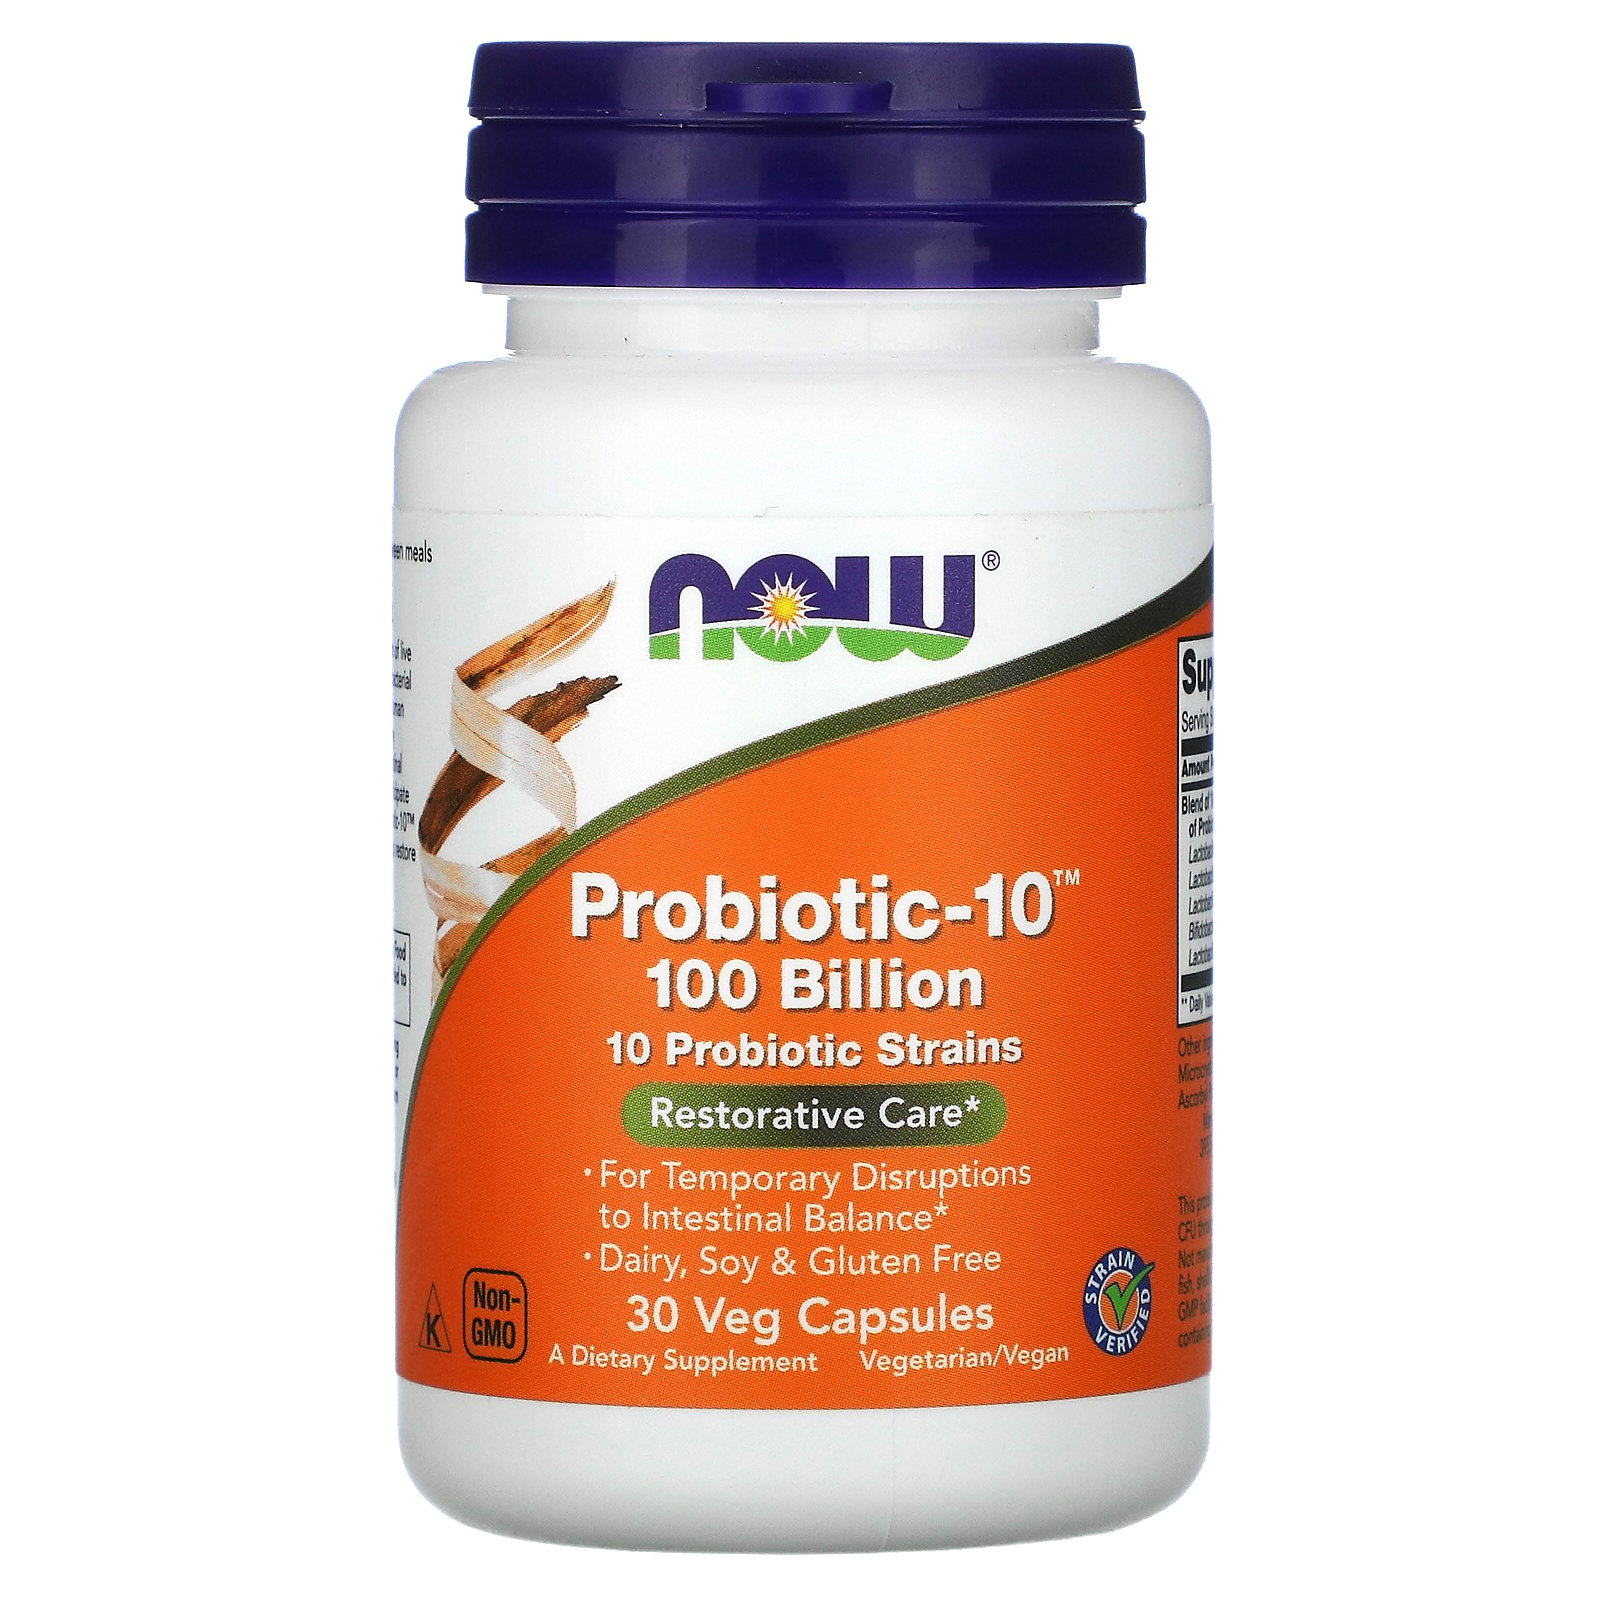 bolt probiotikus anti aging